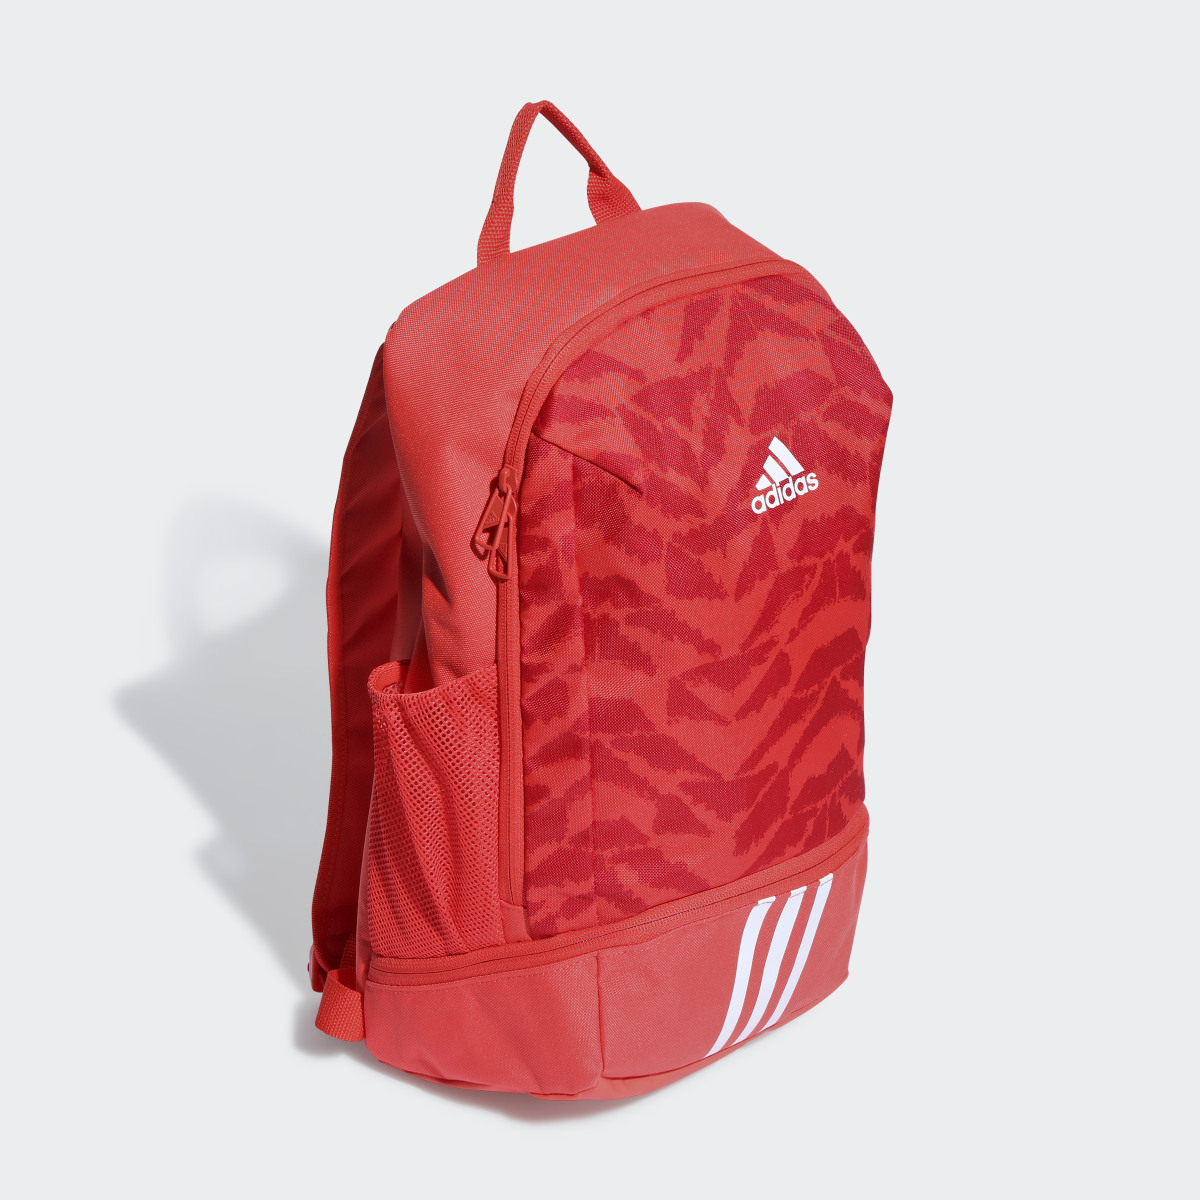 Adidas Football Backpack. 4